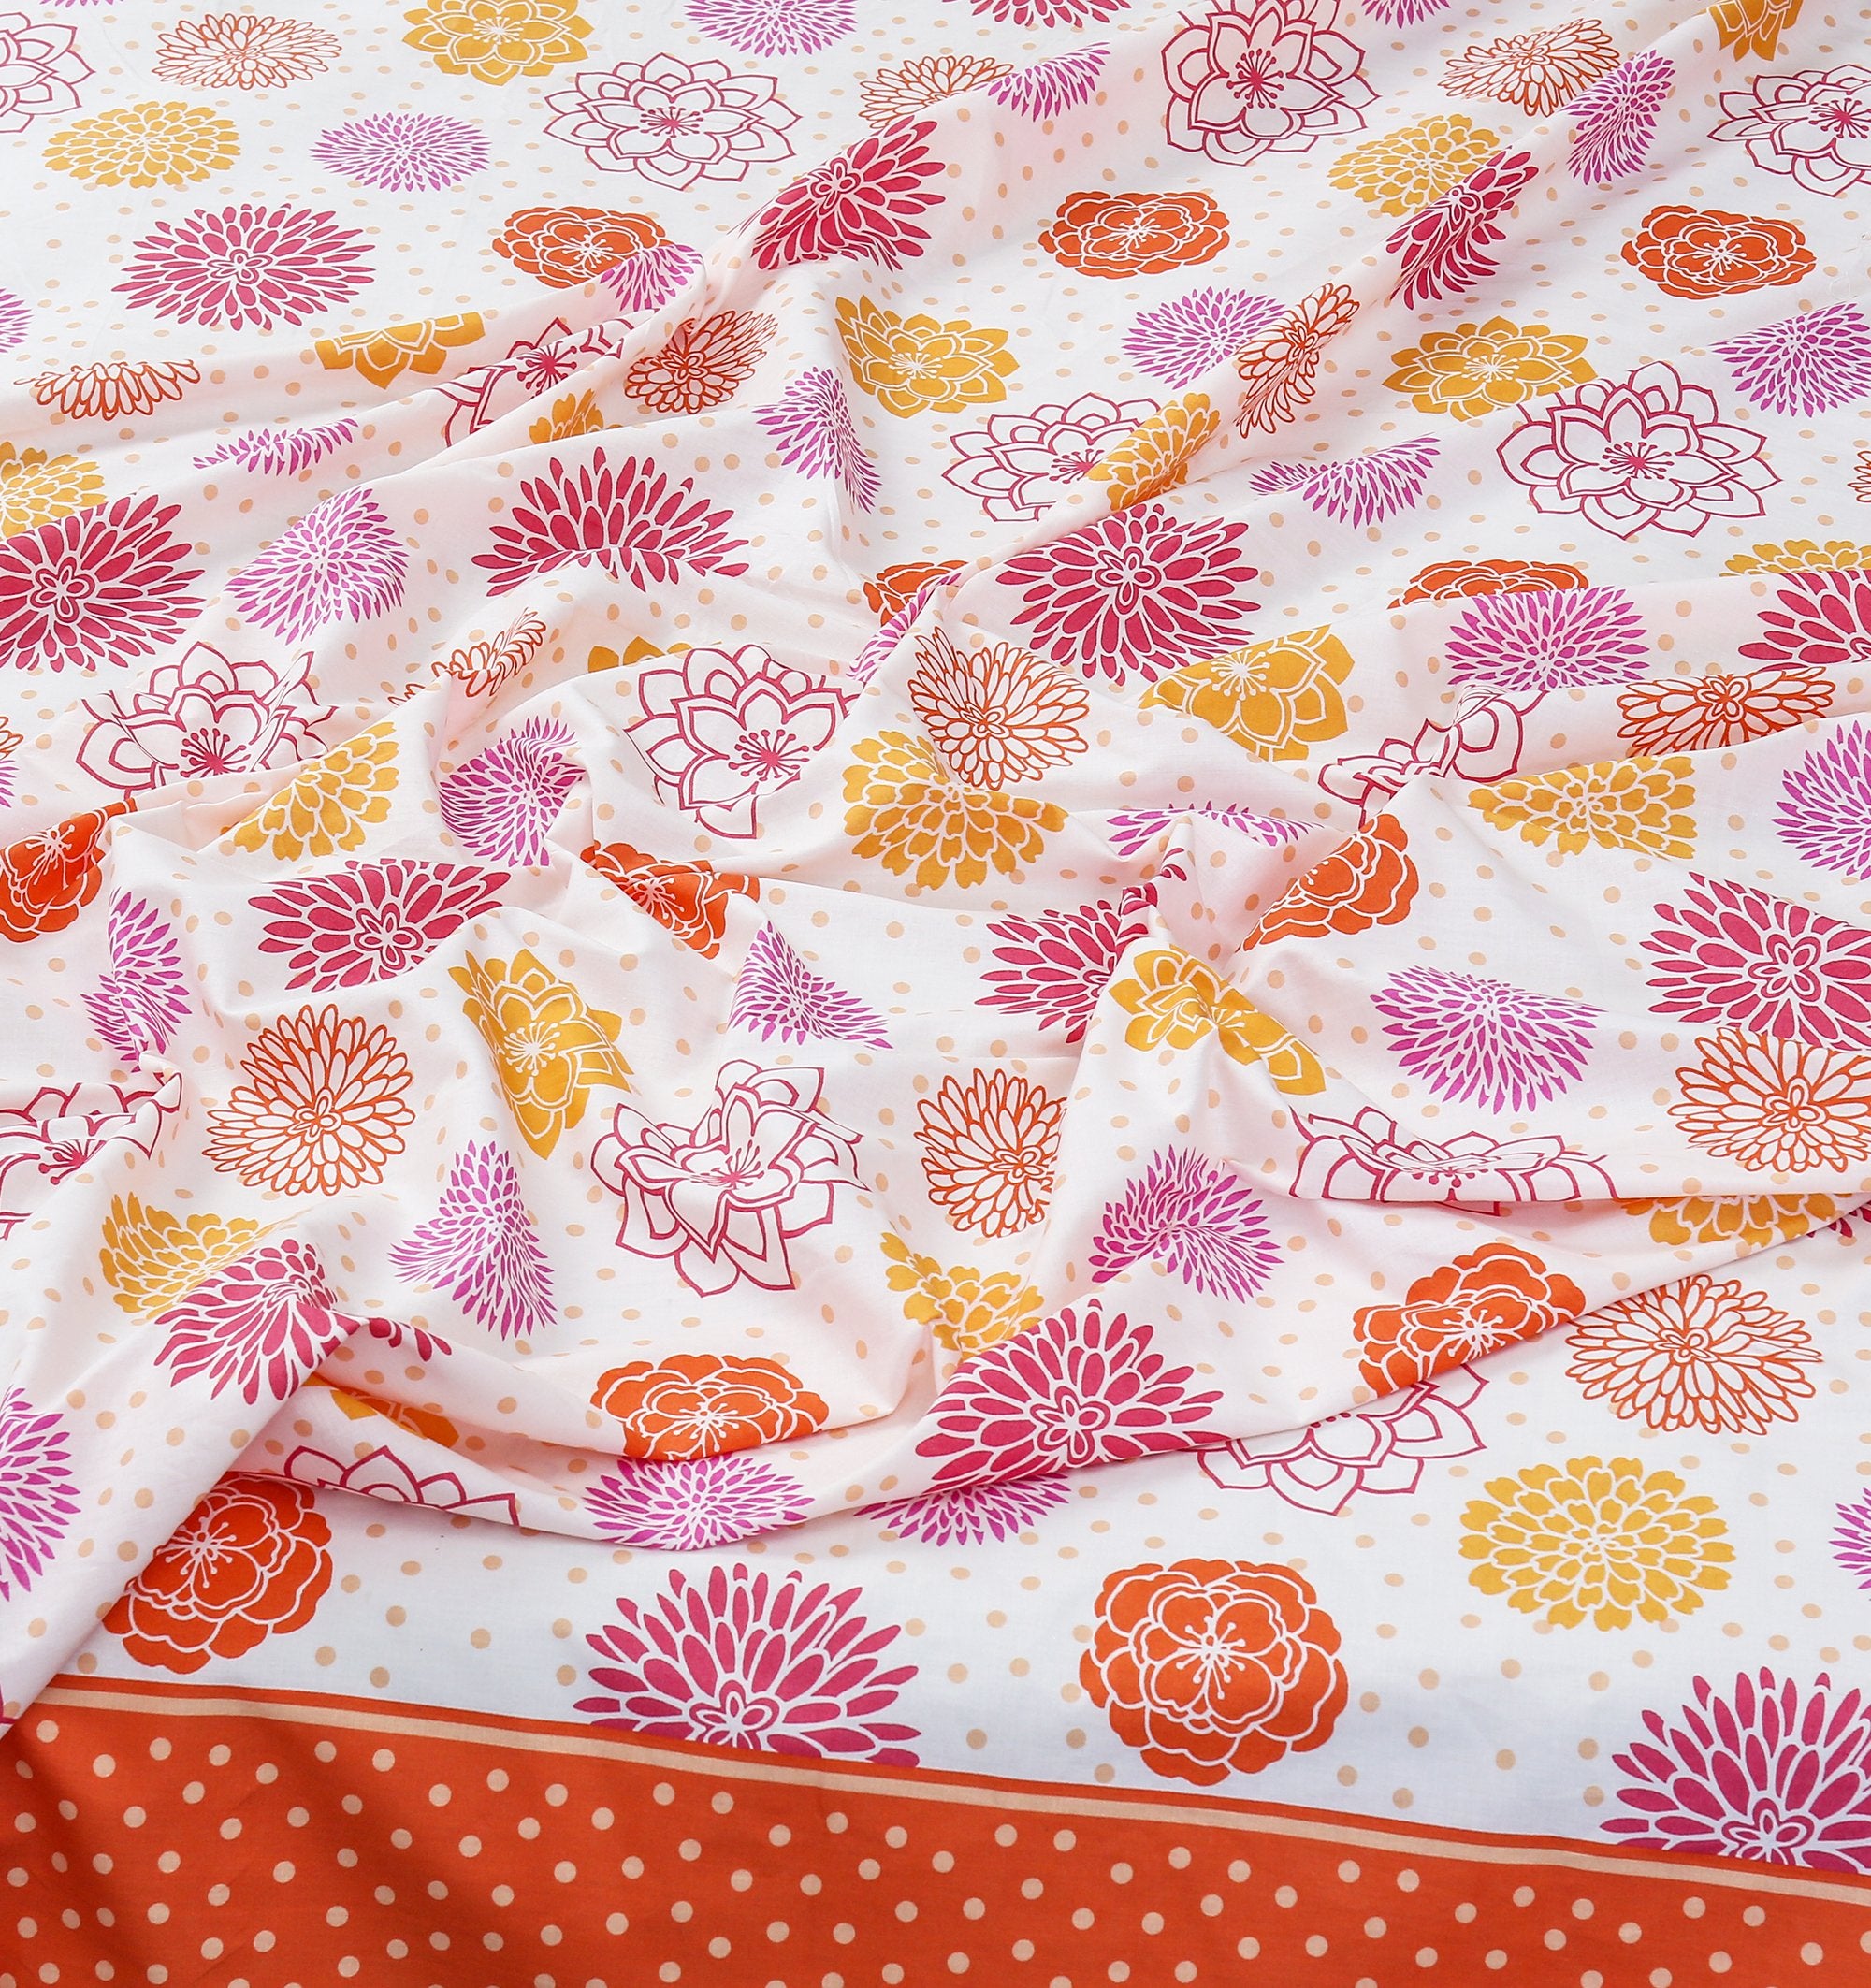 4 Pillows Cotton Bed Sheet - Rangoli